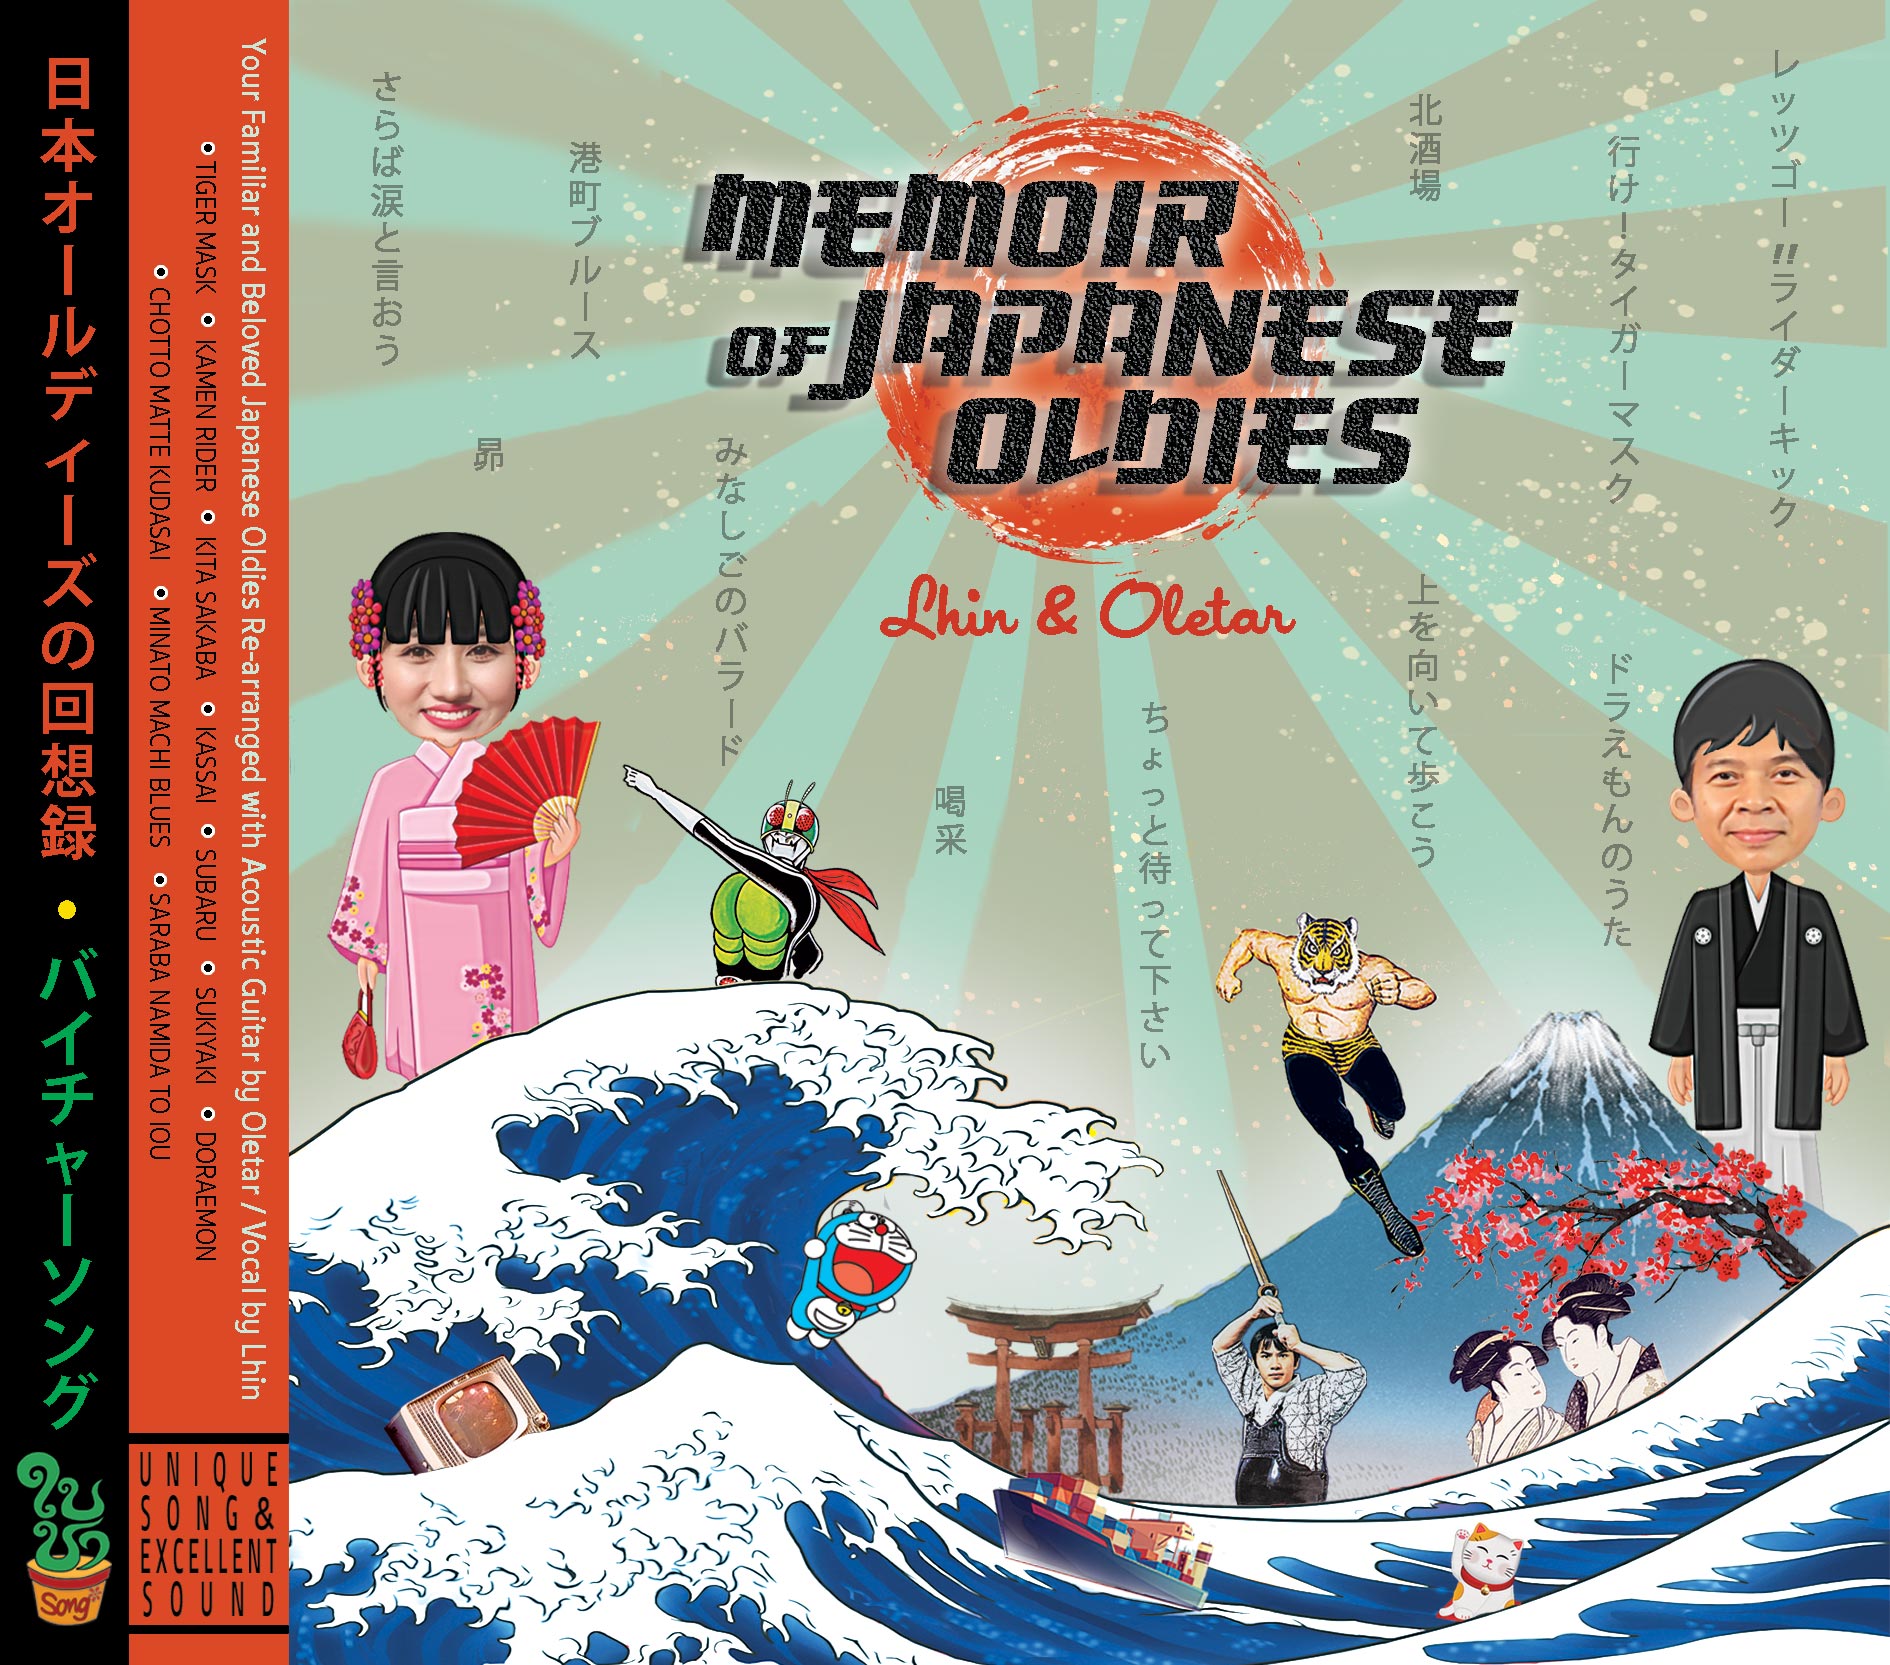 Memoir Of Japanese Oldies Far Side Music Ltd